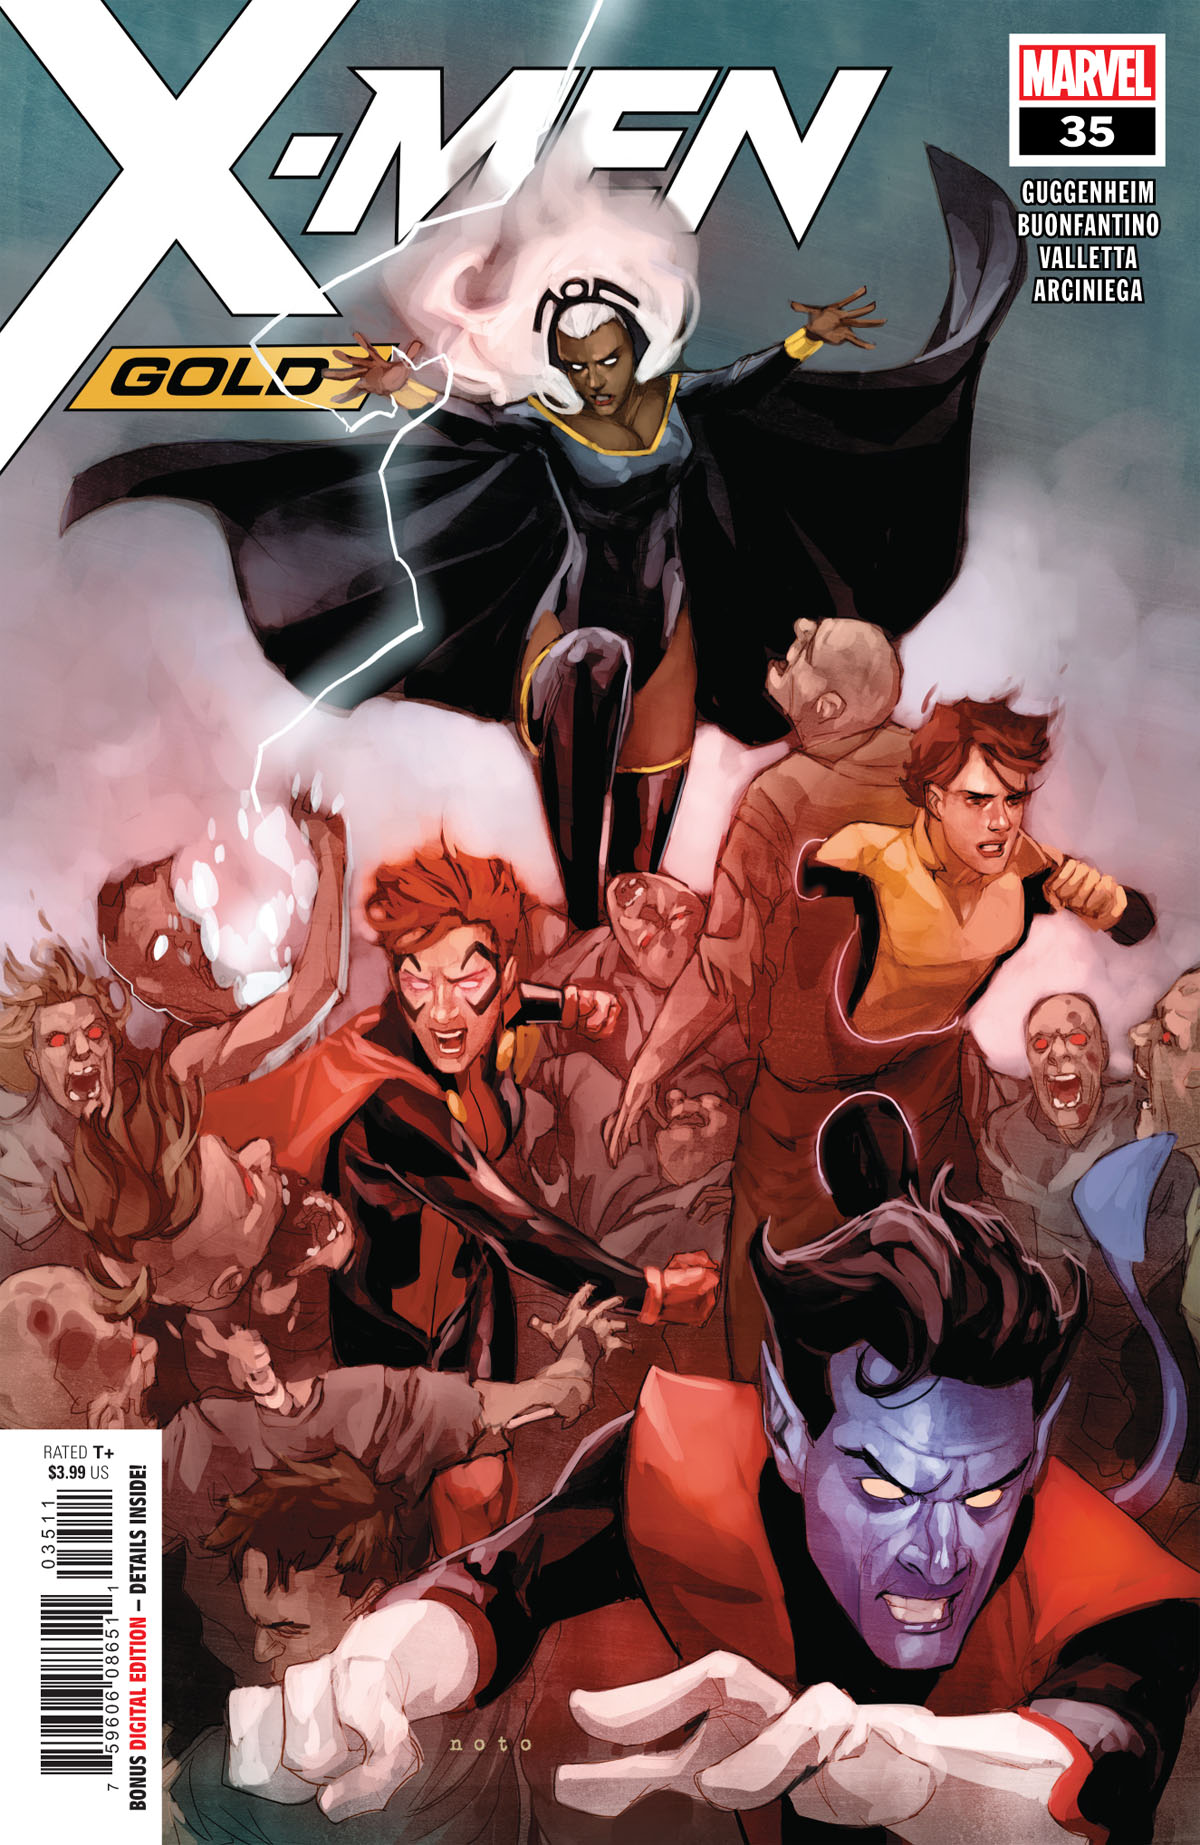 X-Men Gold #35 cover